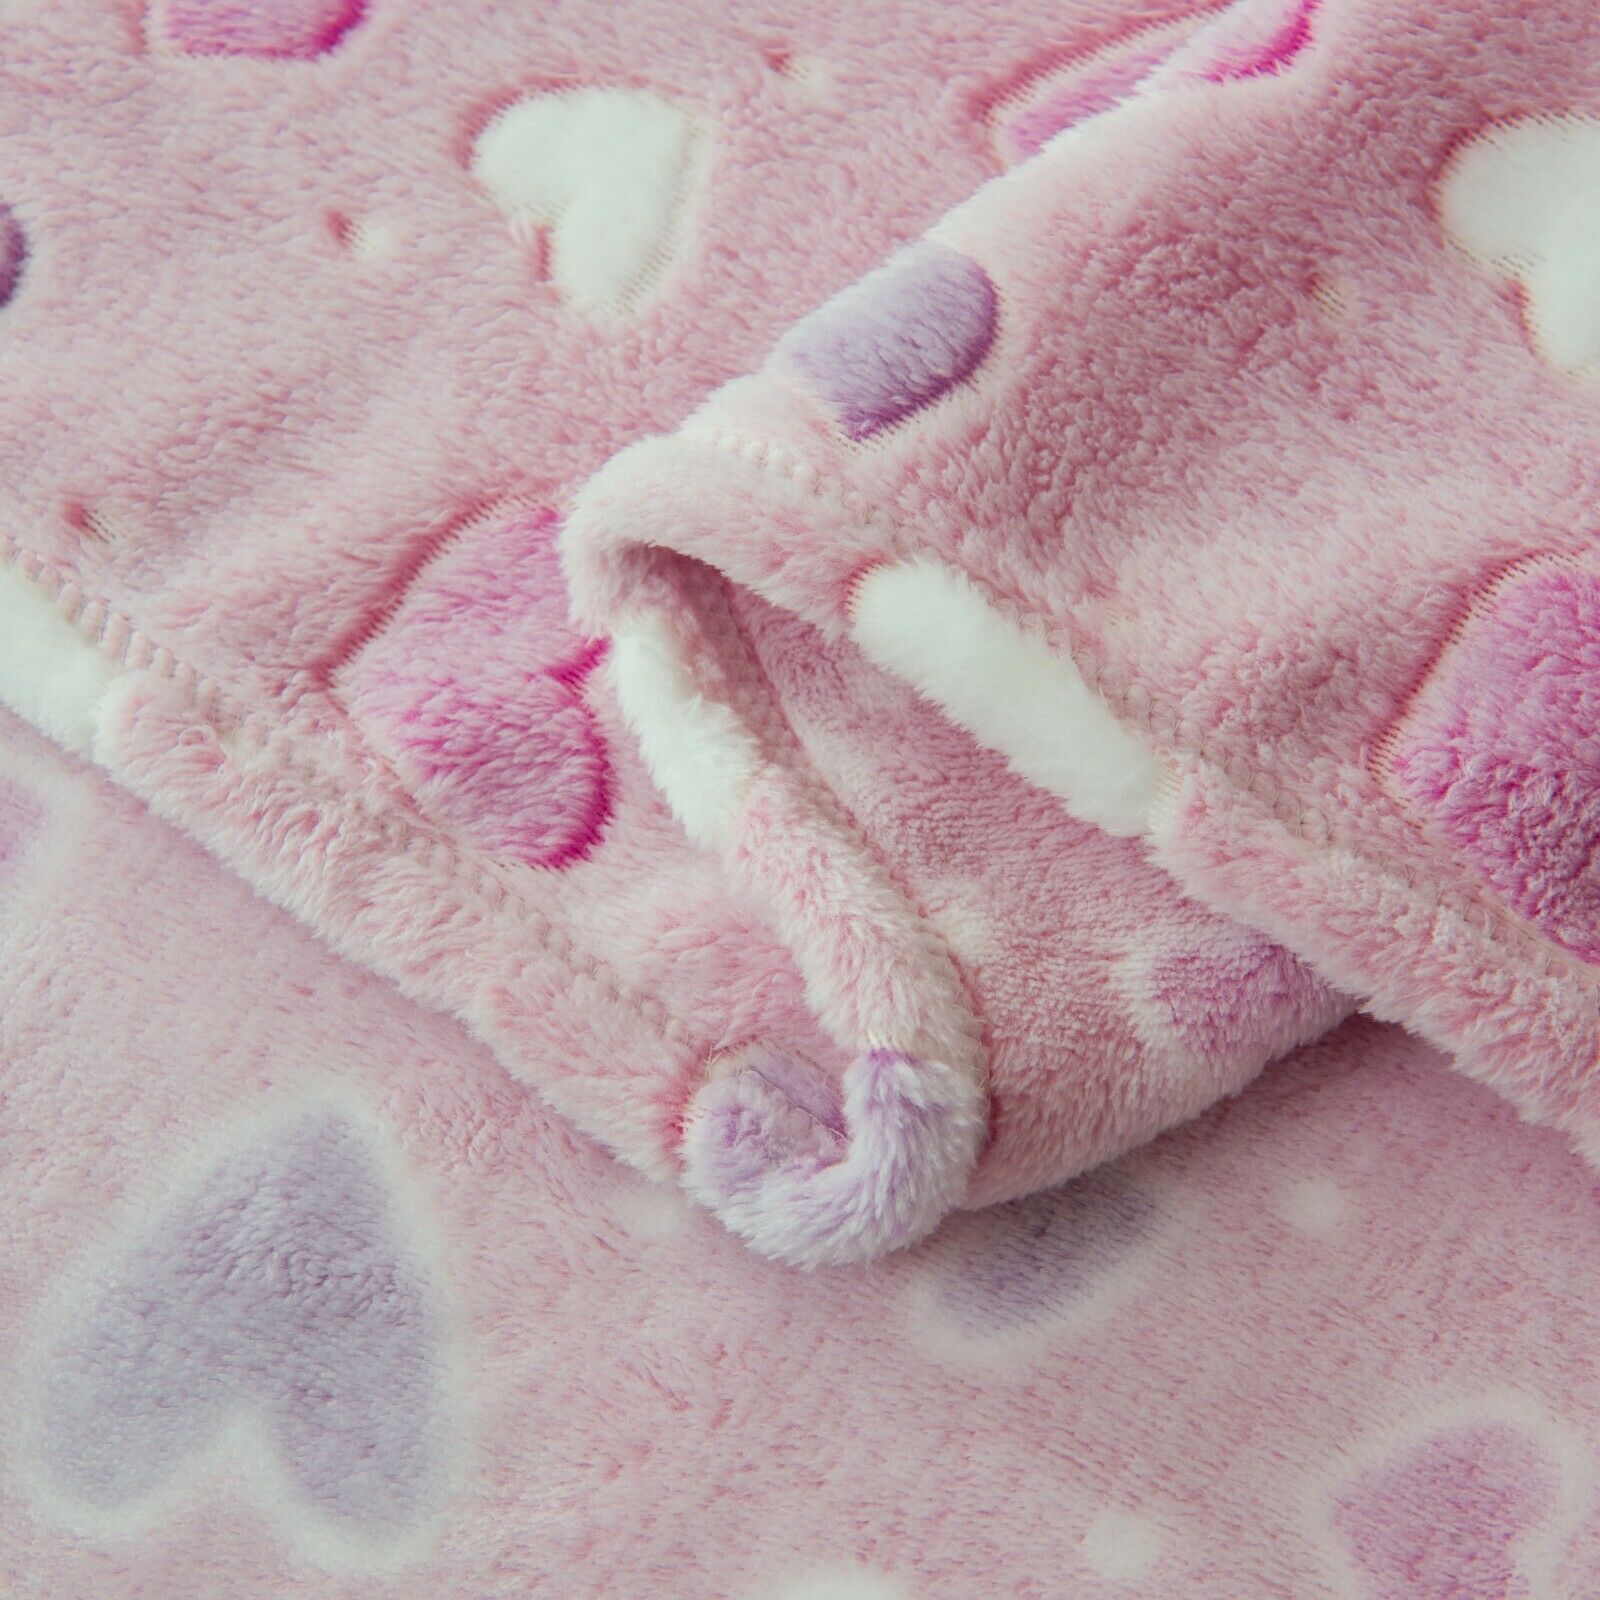 Glow in the Dark Throw Blanket Pink Hearts Kids Super Soft Fun Gift 50" x 60" in